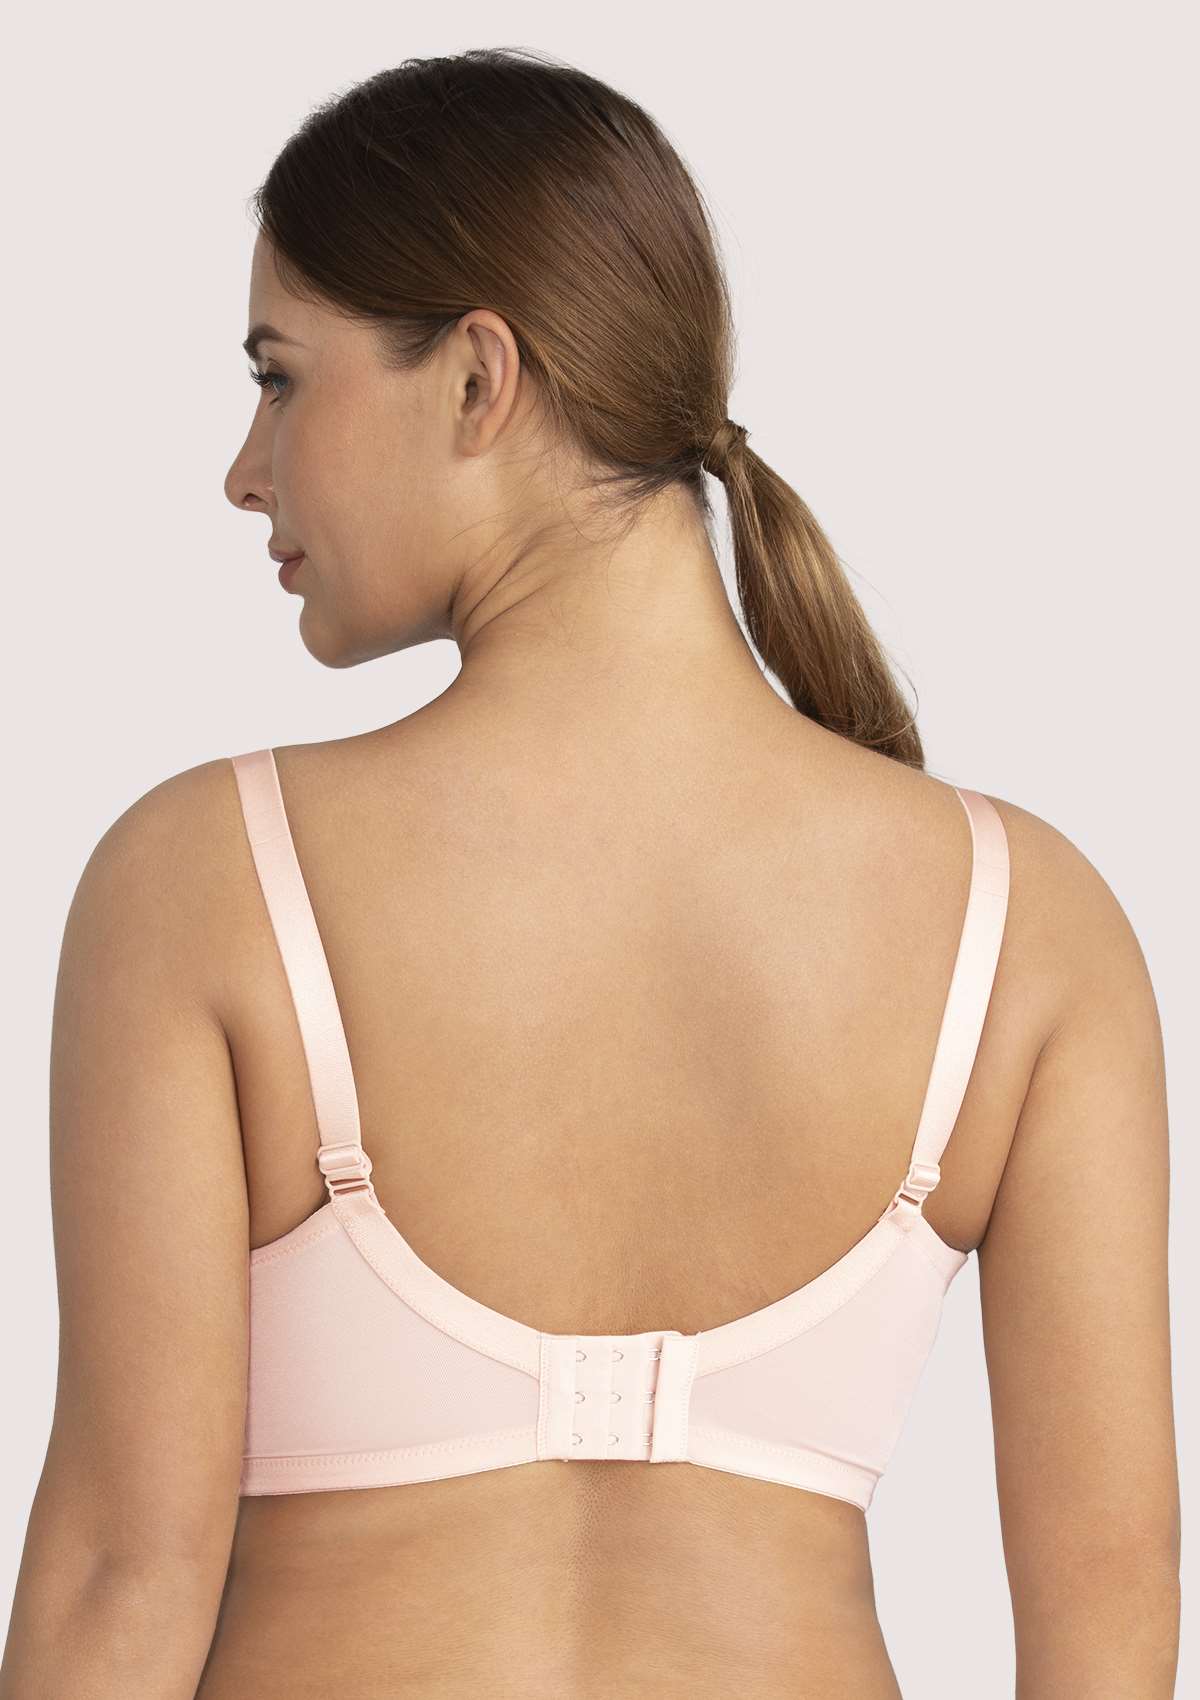 HSIA Sunflower Matching Bra And Panties Set: Comfortable Plus Size Bra - Pink / 46 / D